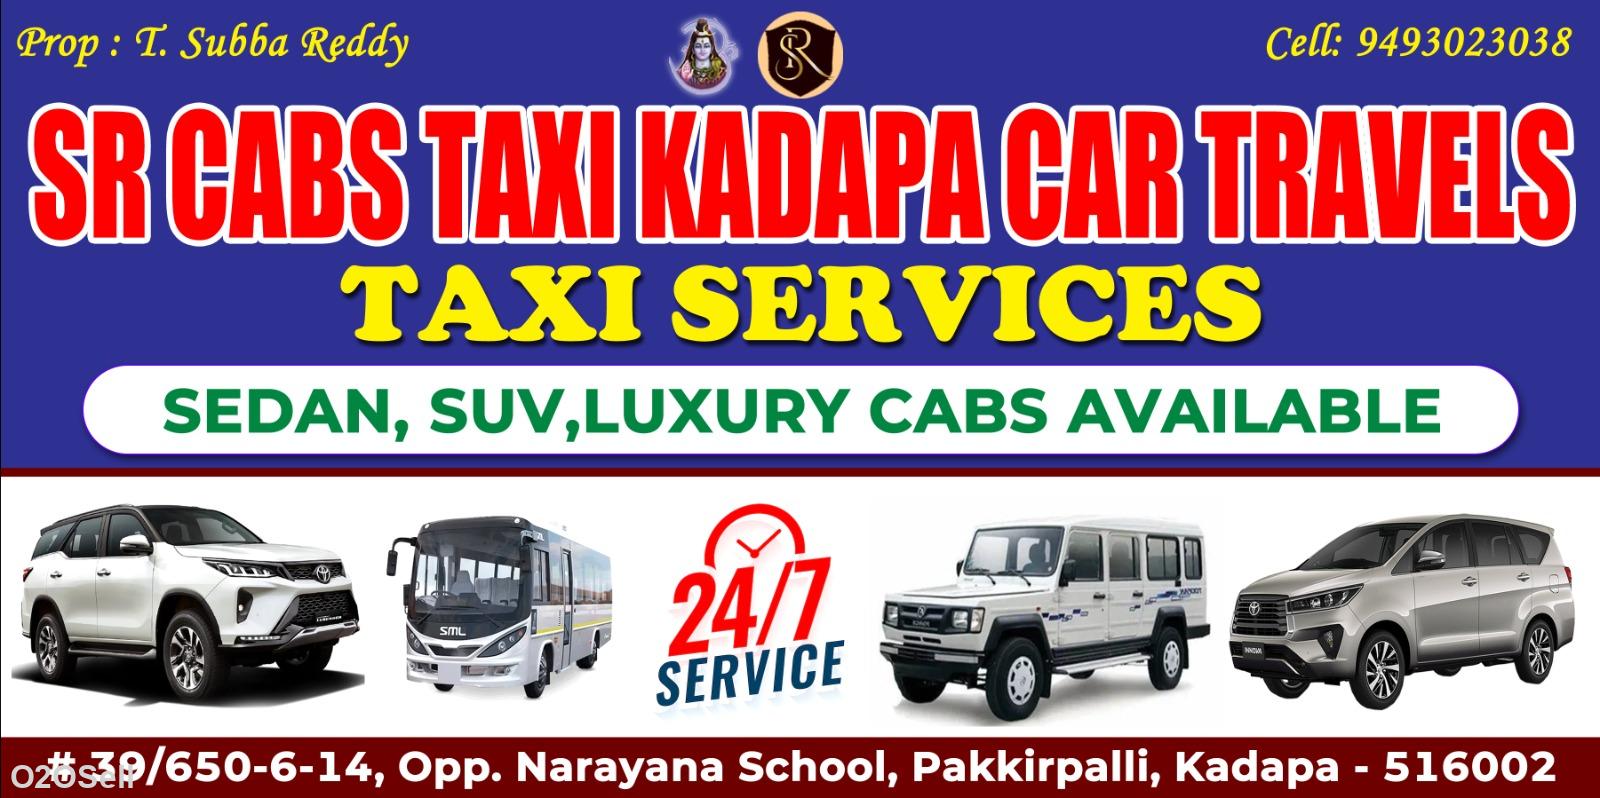 SR Cabs Kadapa - 09493023038 - Cover Image